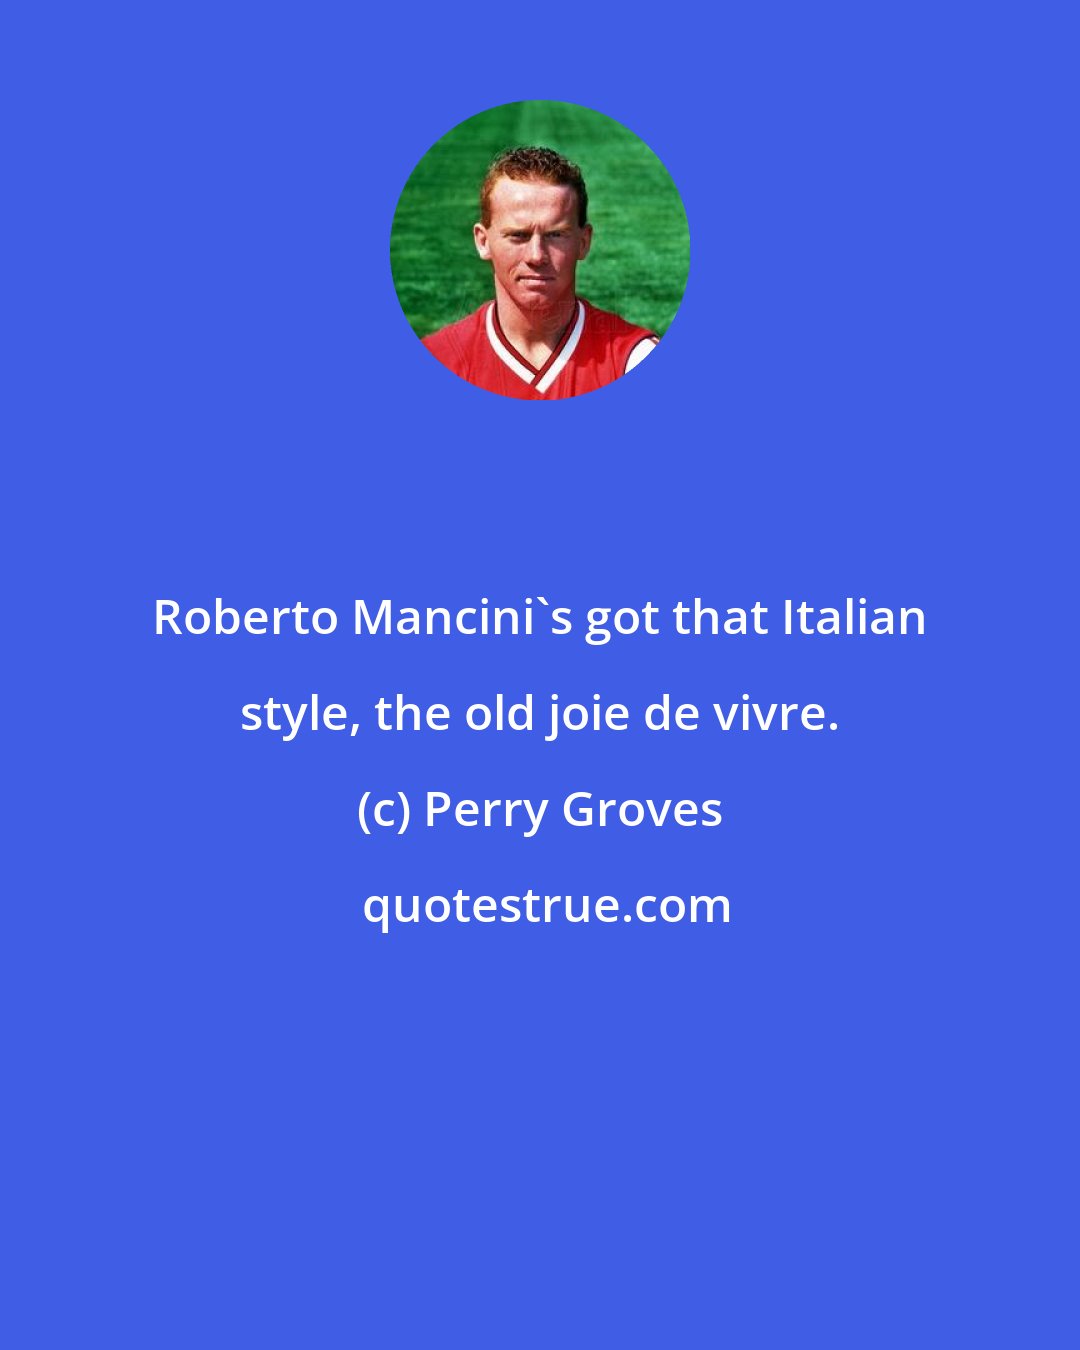 Perry Groves: Roberto Mancini's got that Italian style, the old joie de vivre.